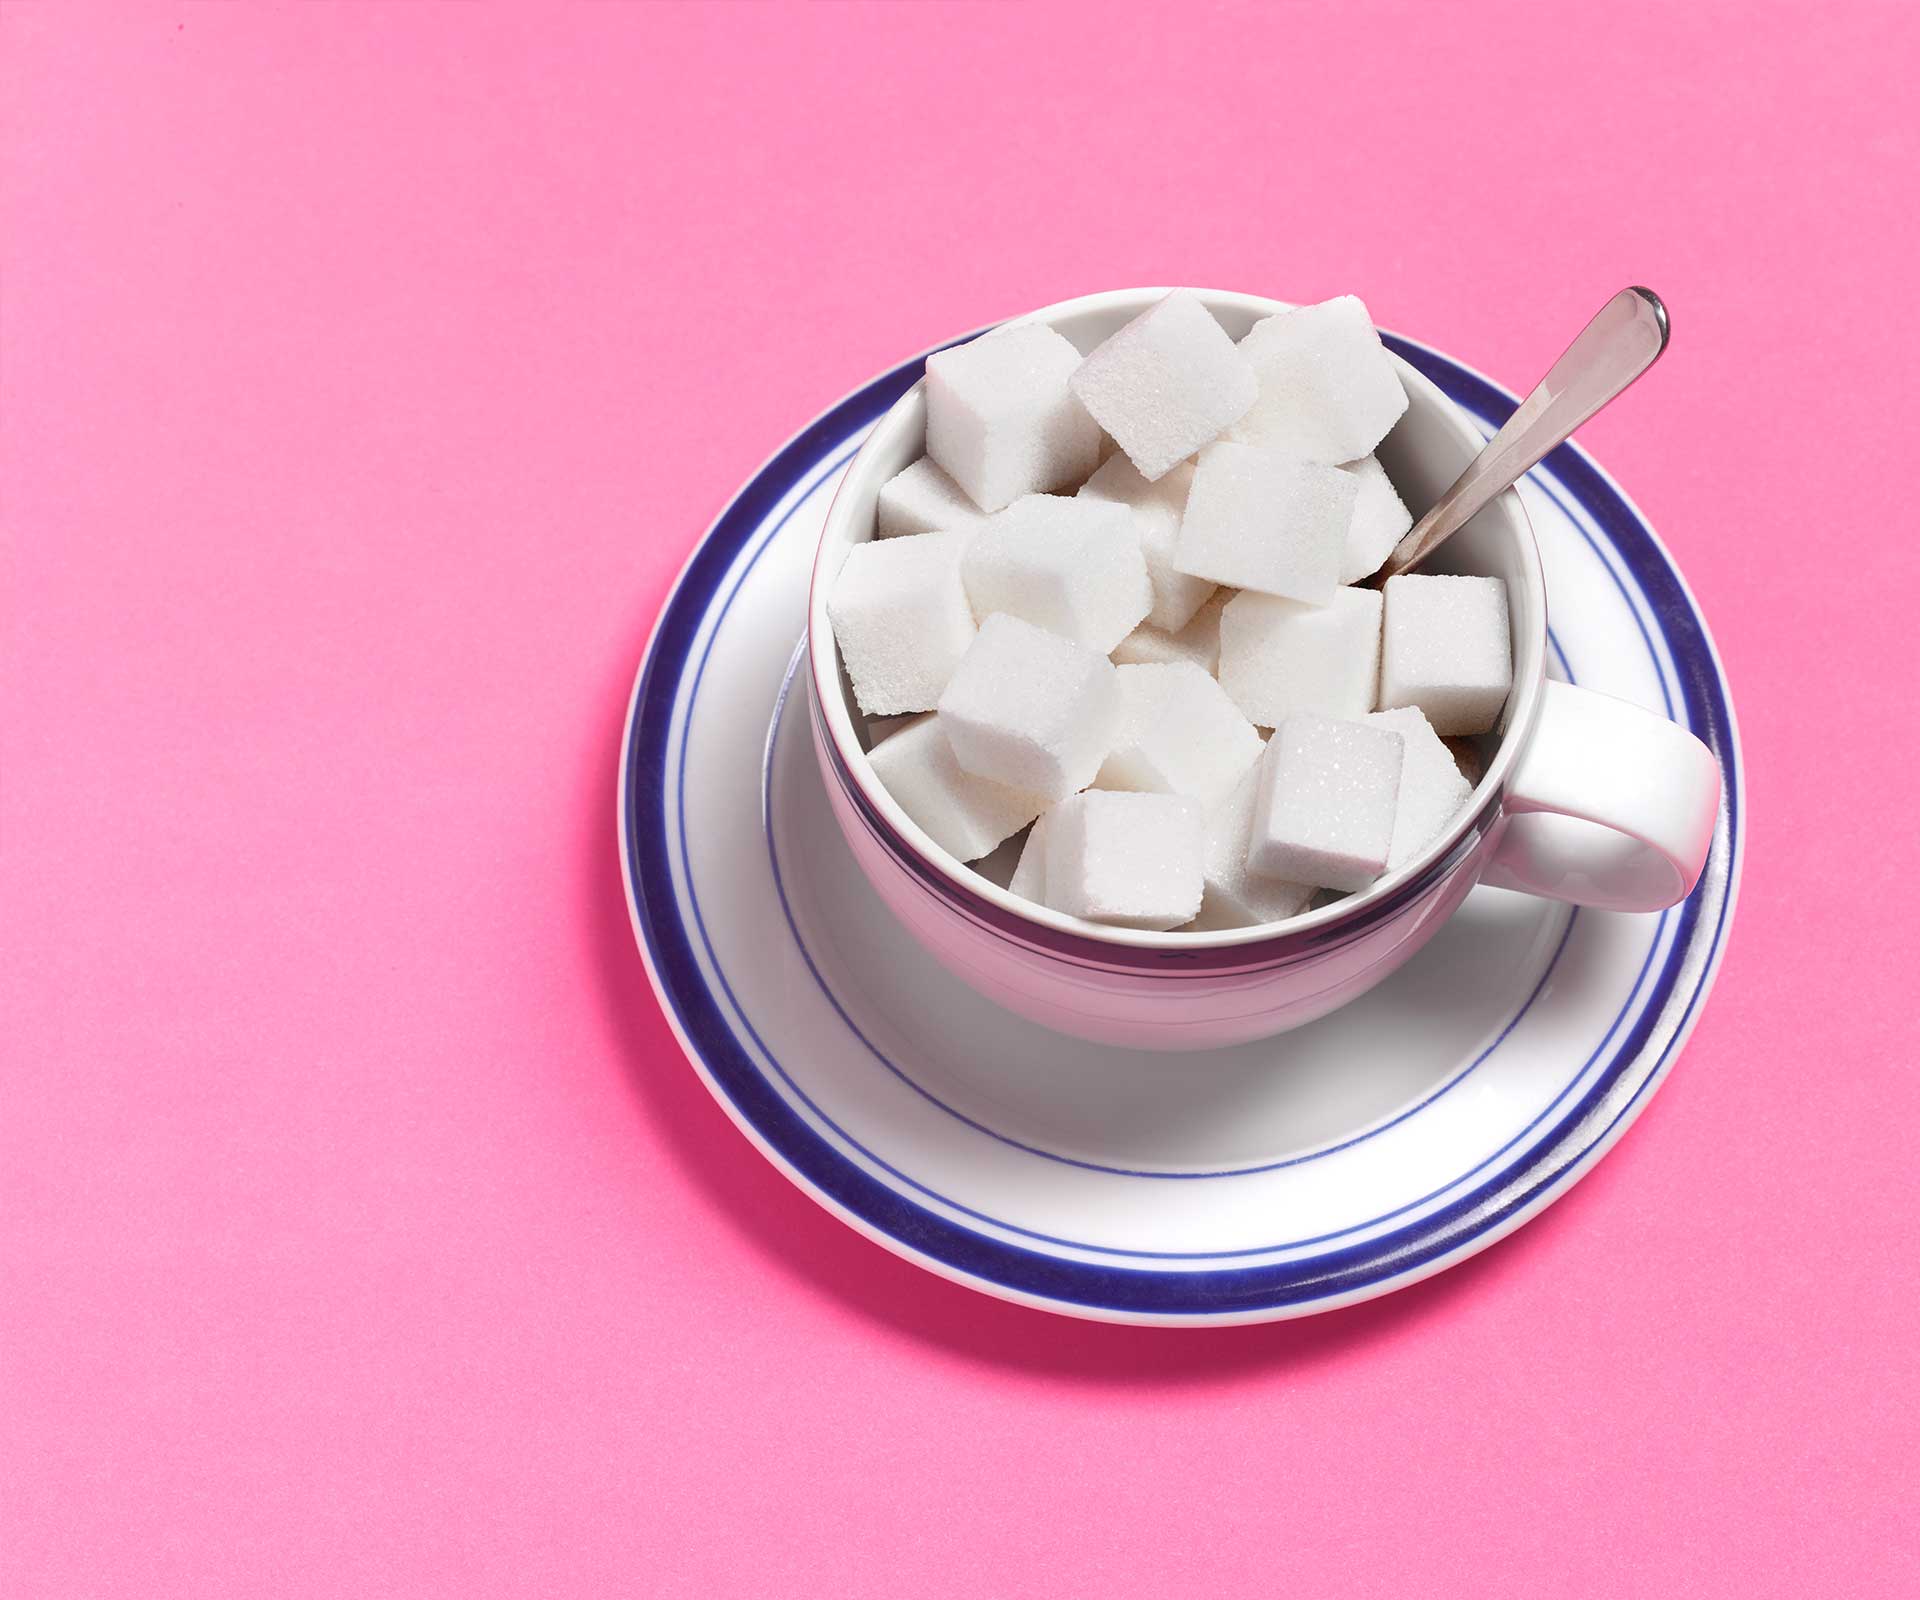 Sugar alternatives may be higher in kilojoules than sugar